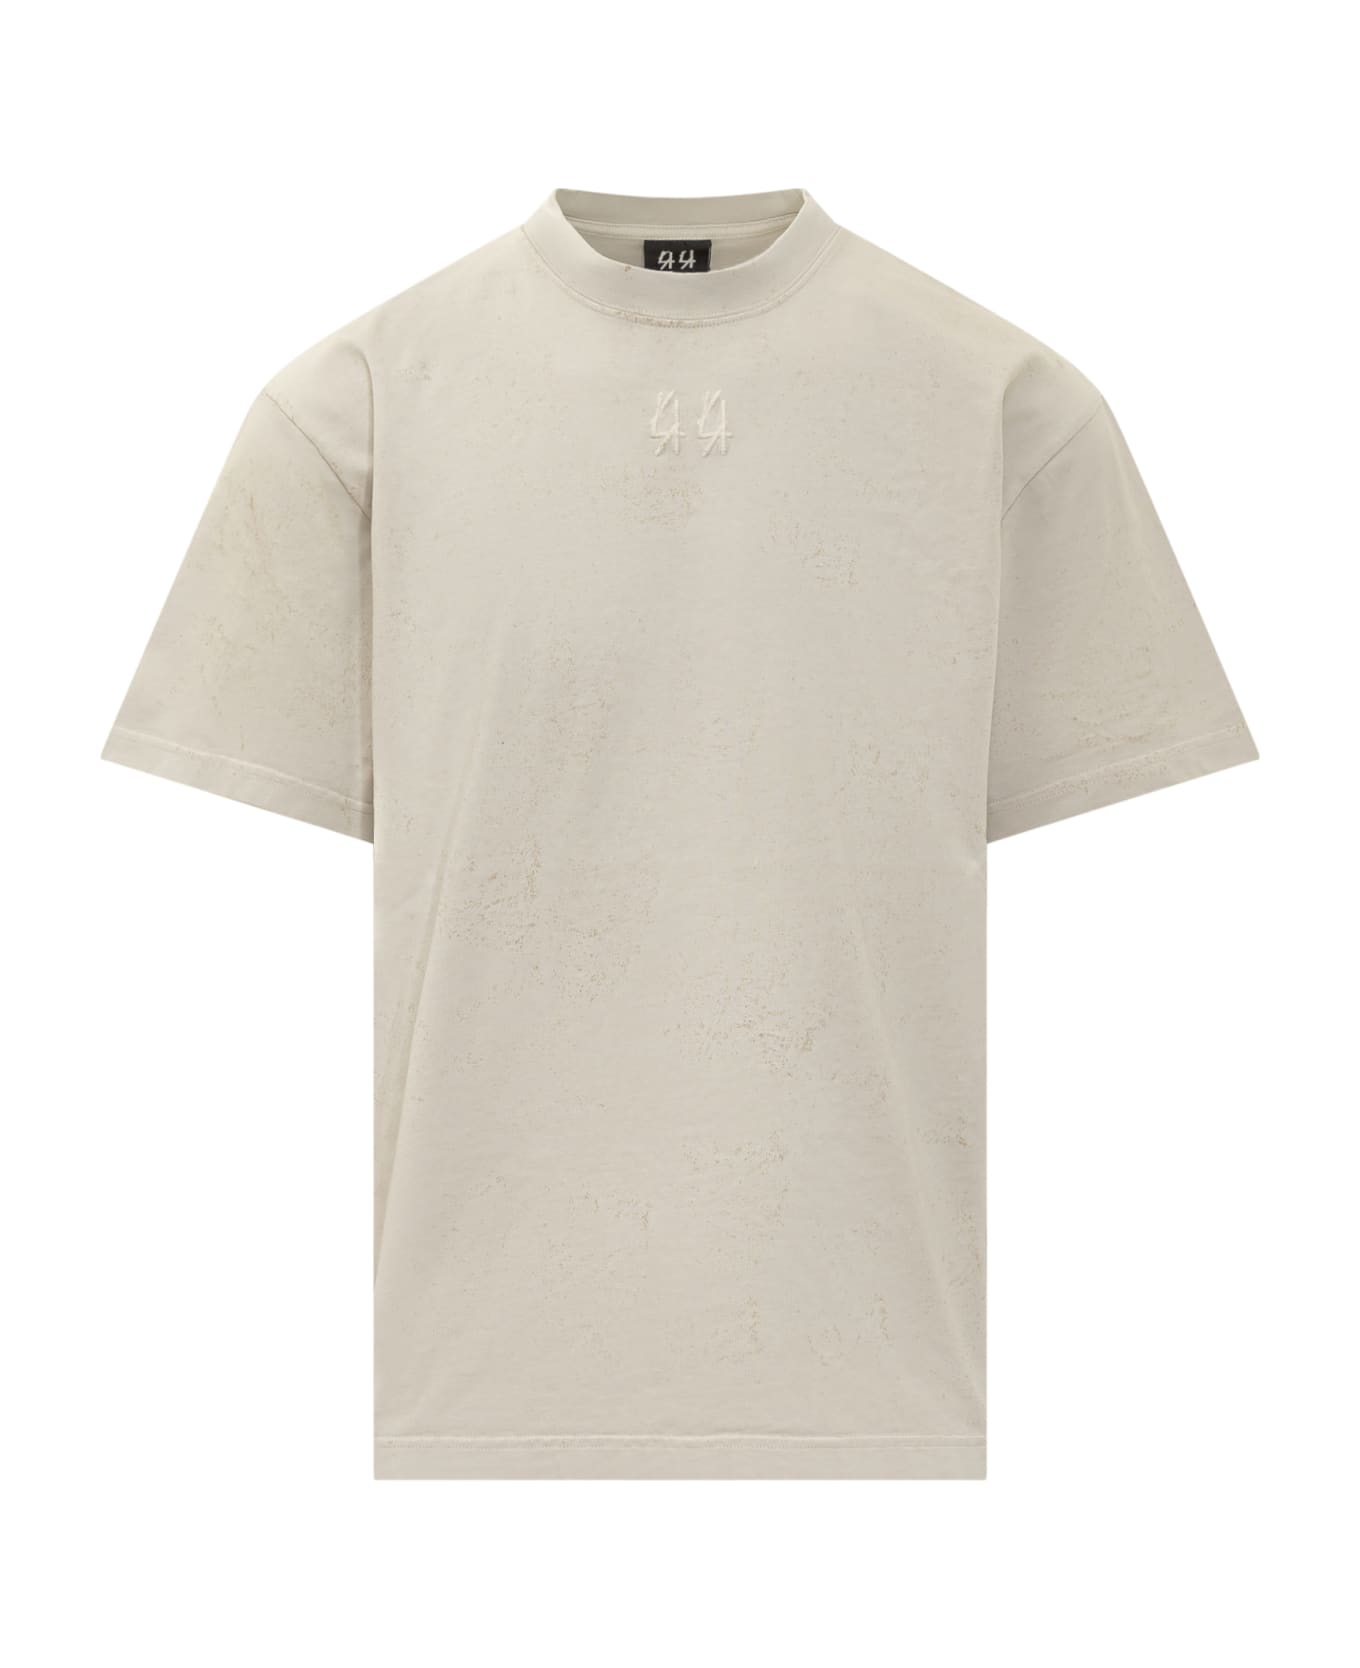 44 Label Group T-shirt Con Vortex Effect - DIRTY WHITE-GYPS